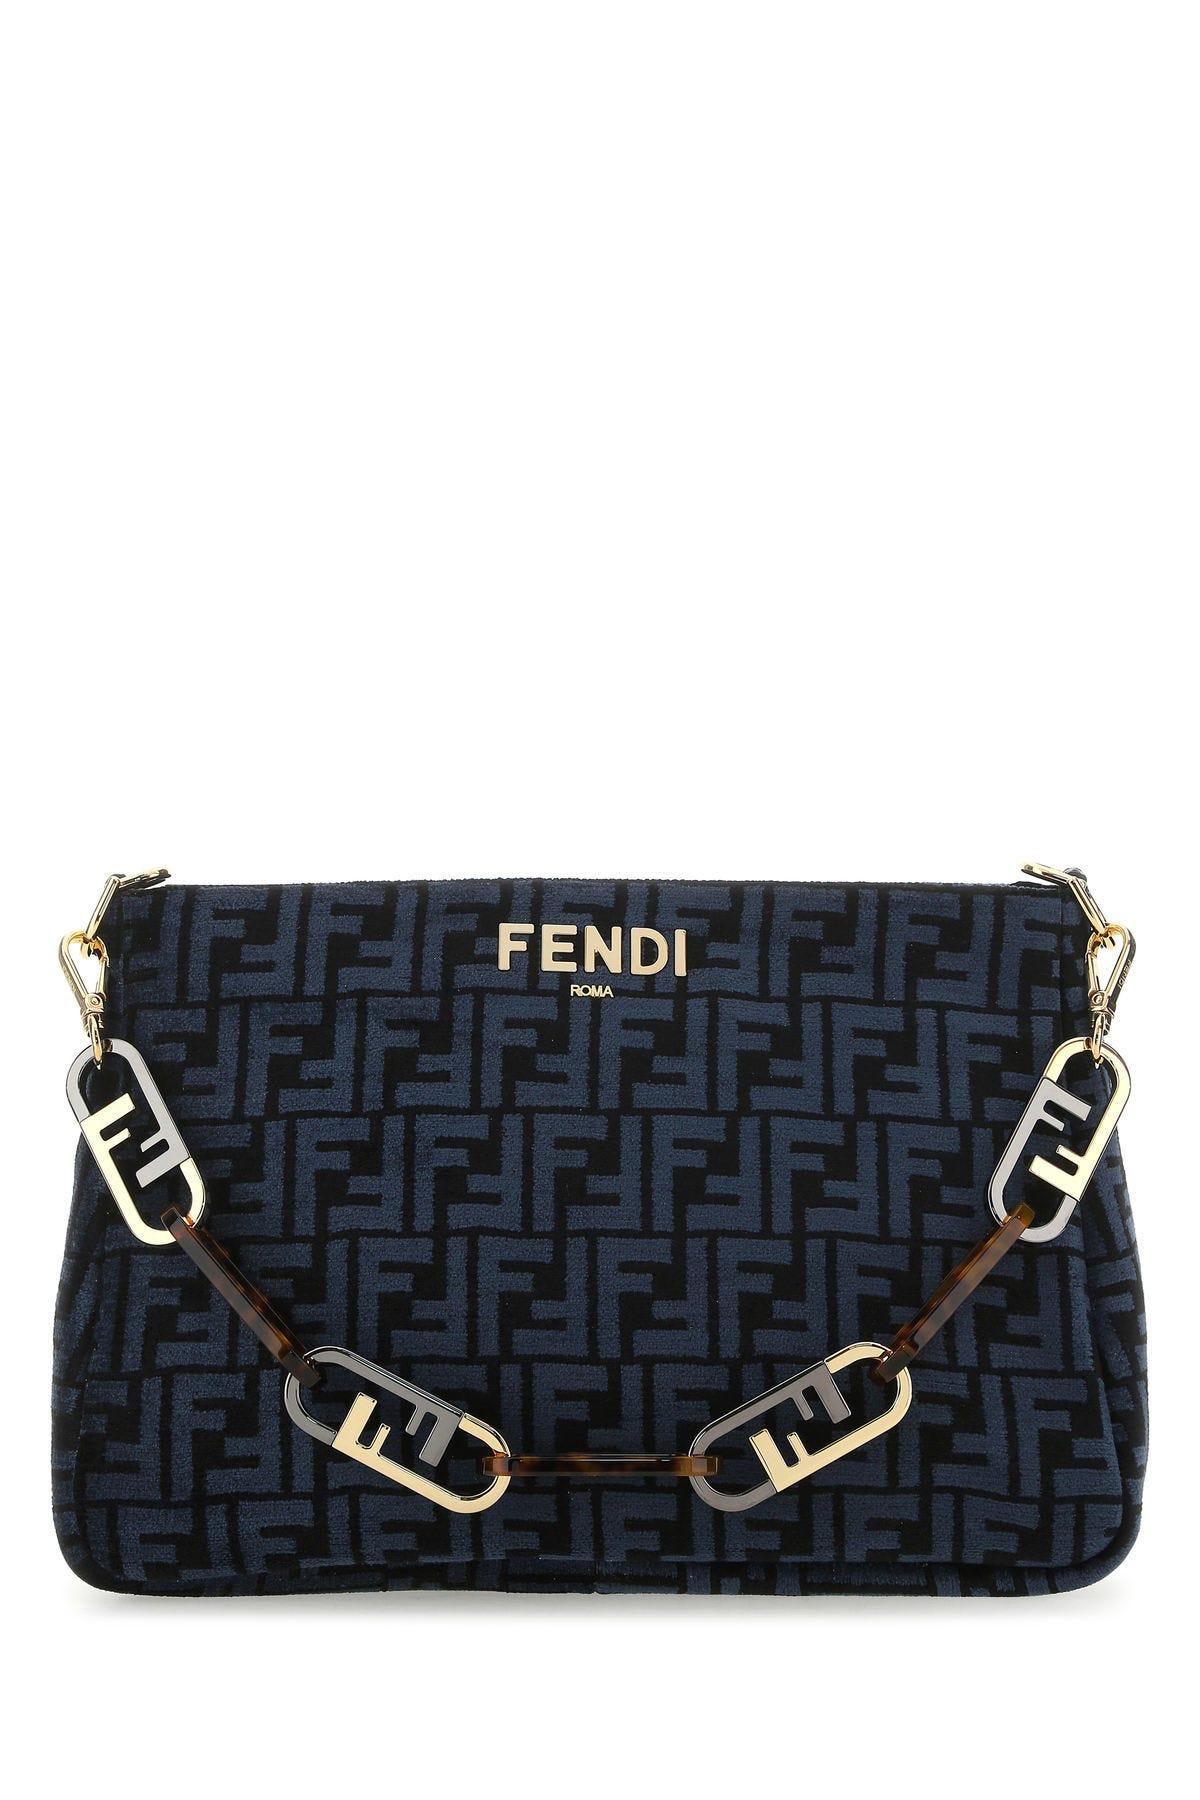 Fendi Embroidered Fabric O Lock Zip Handbag